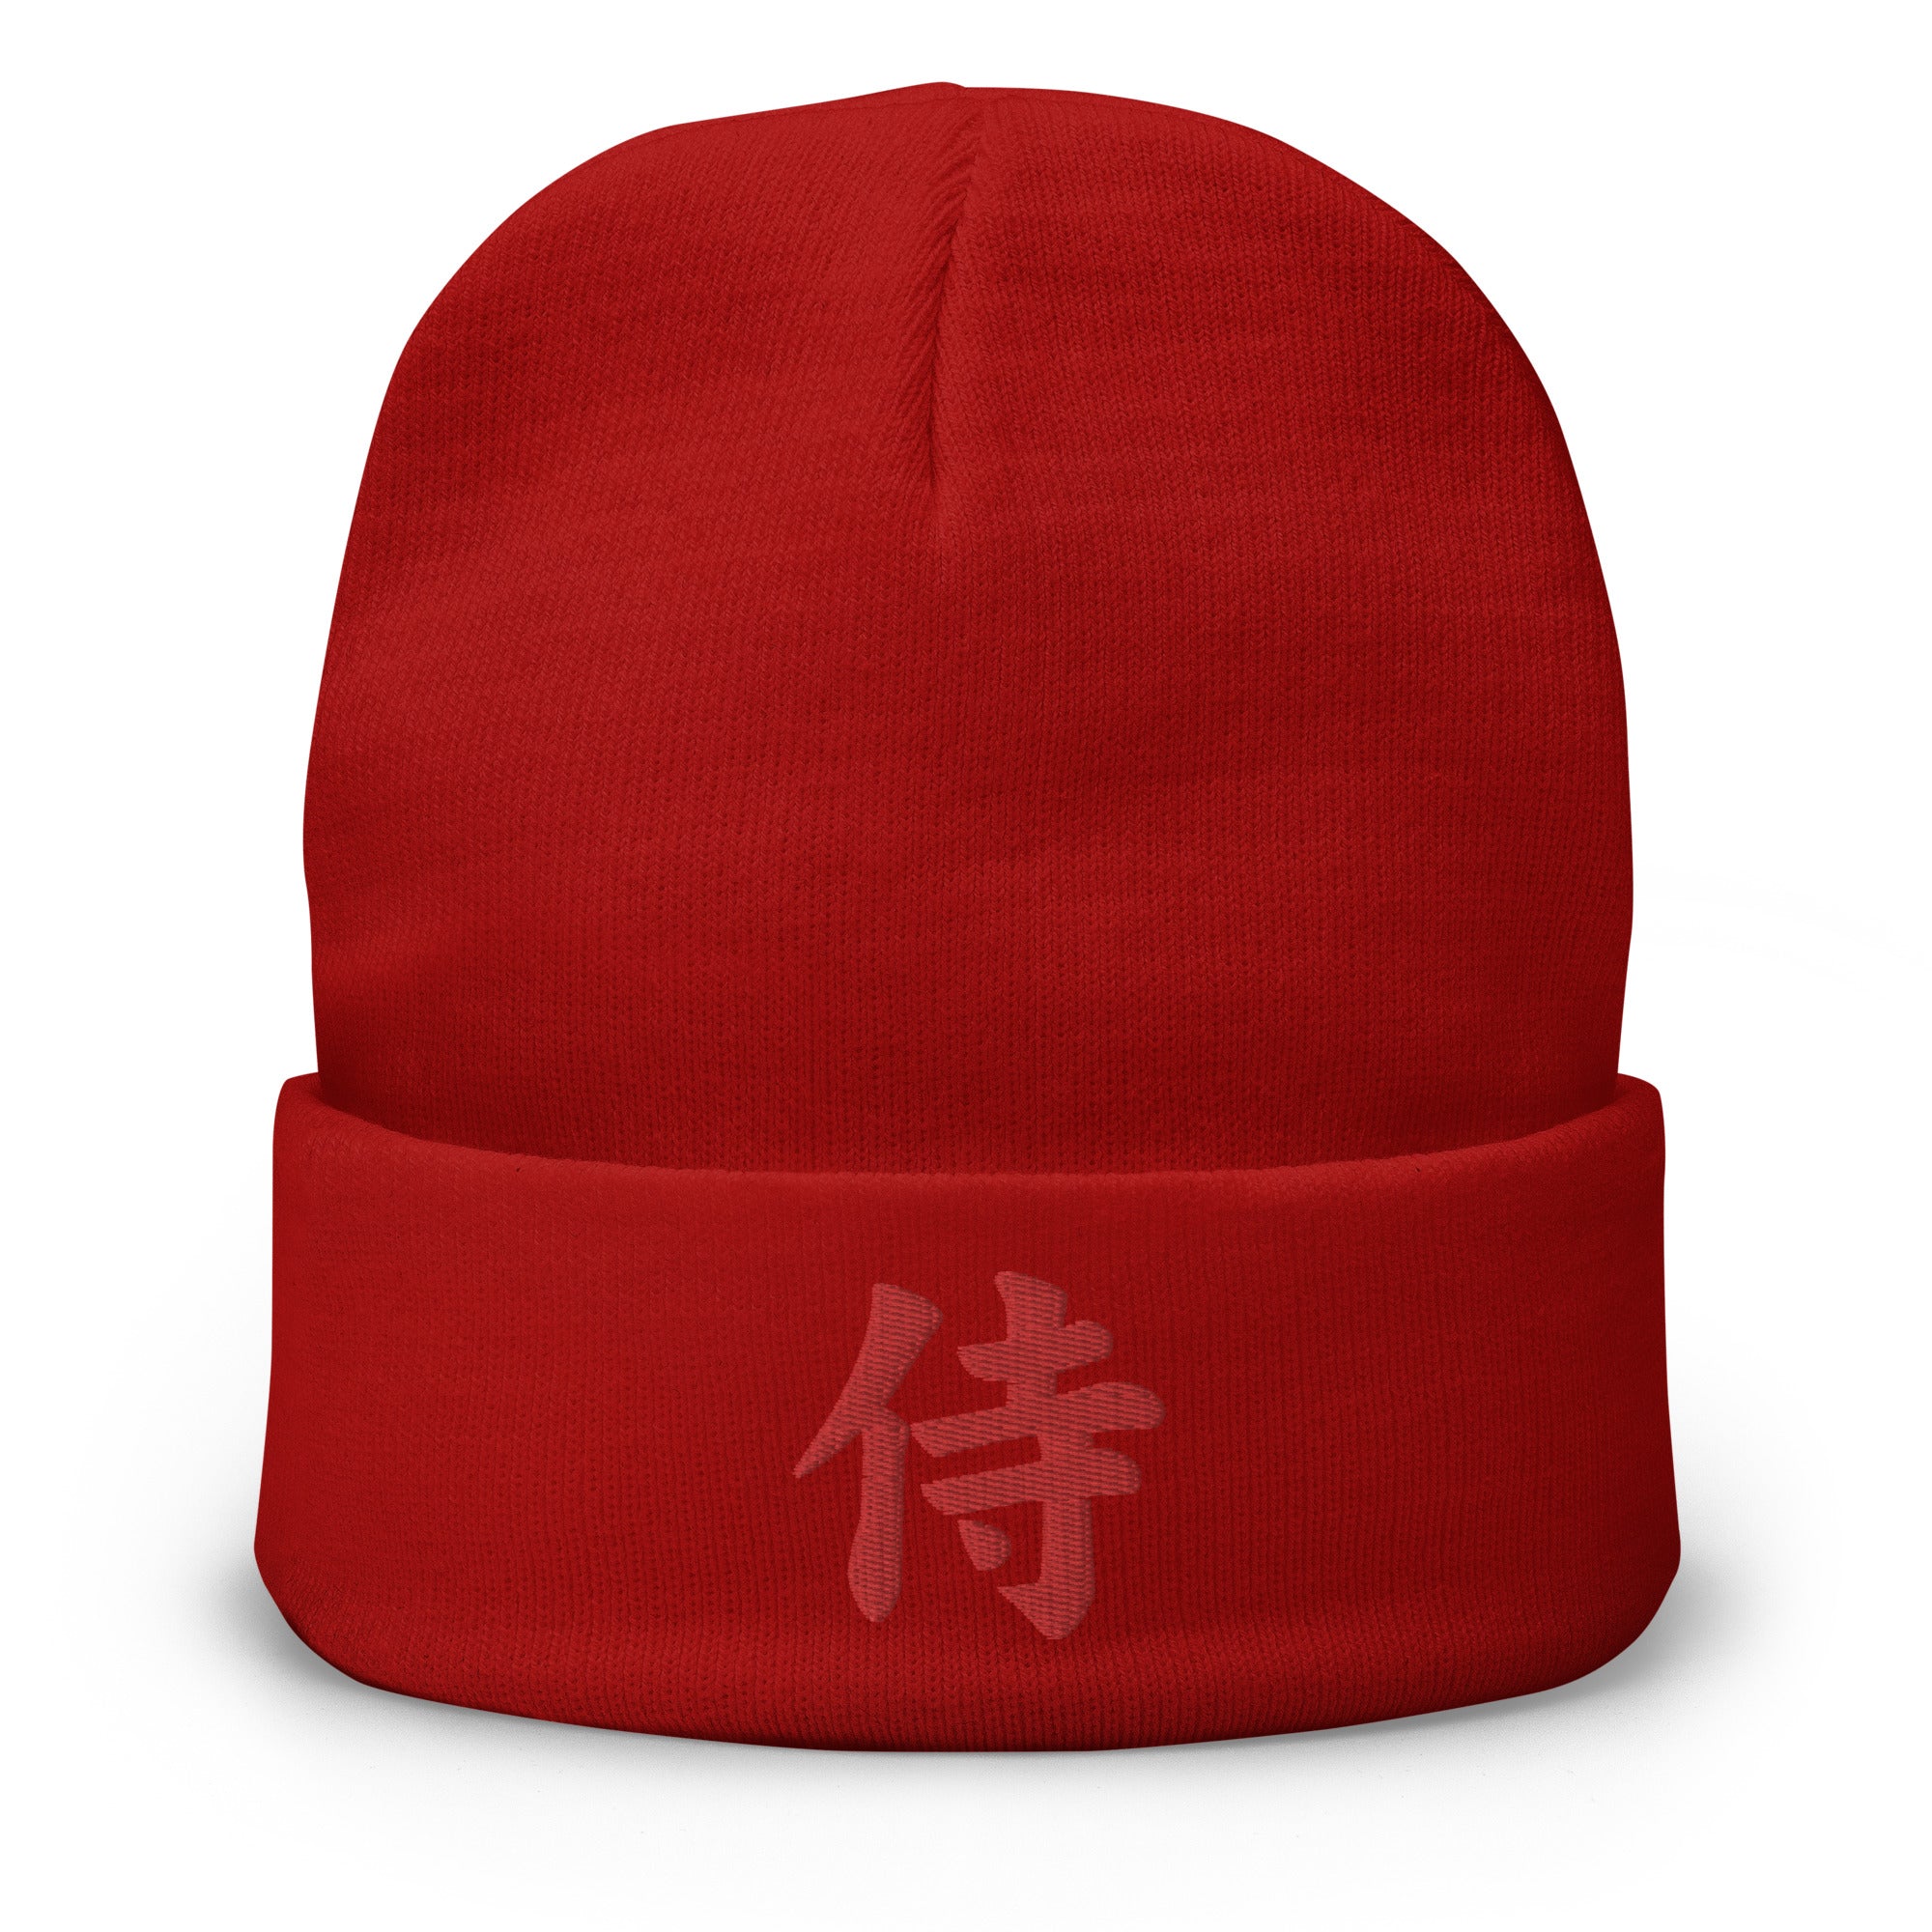 Samurai The Japanese Kanji Symbol Embroidered Cuff Beanie Red Thread - Edge of Life Designs